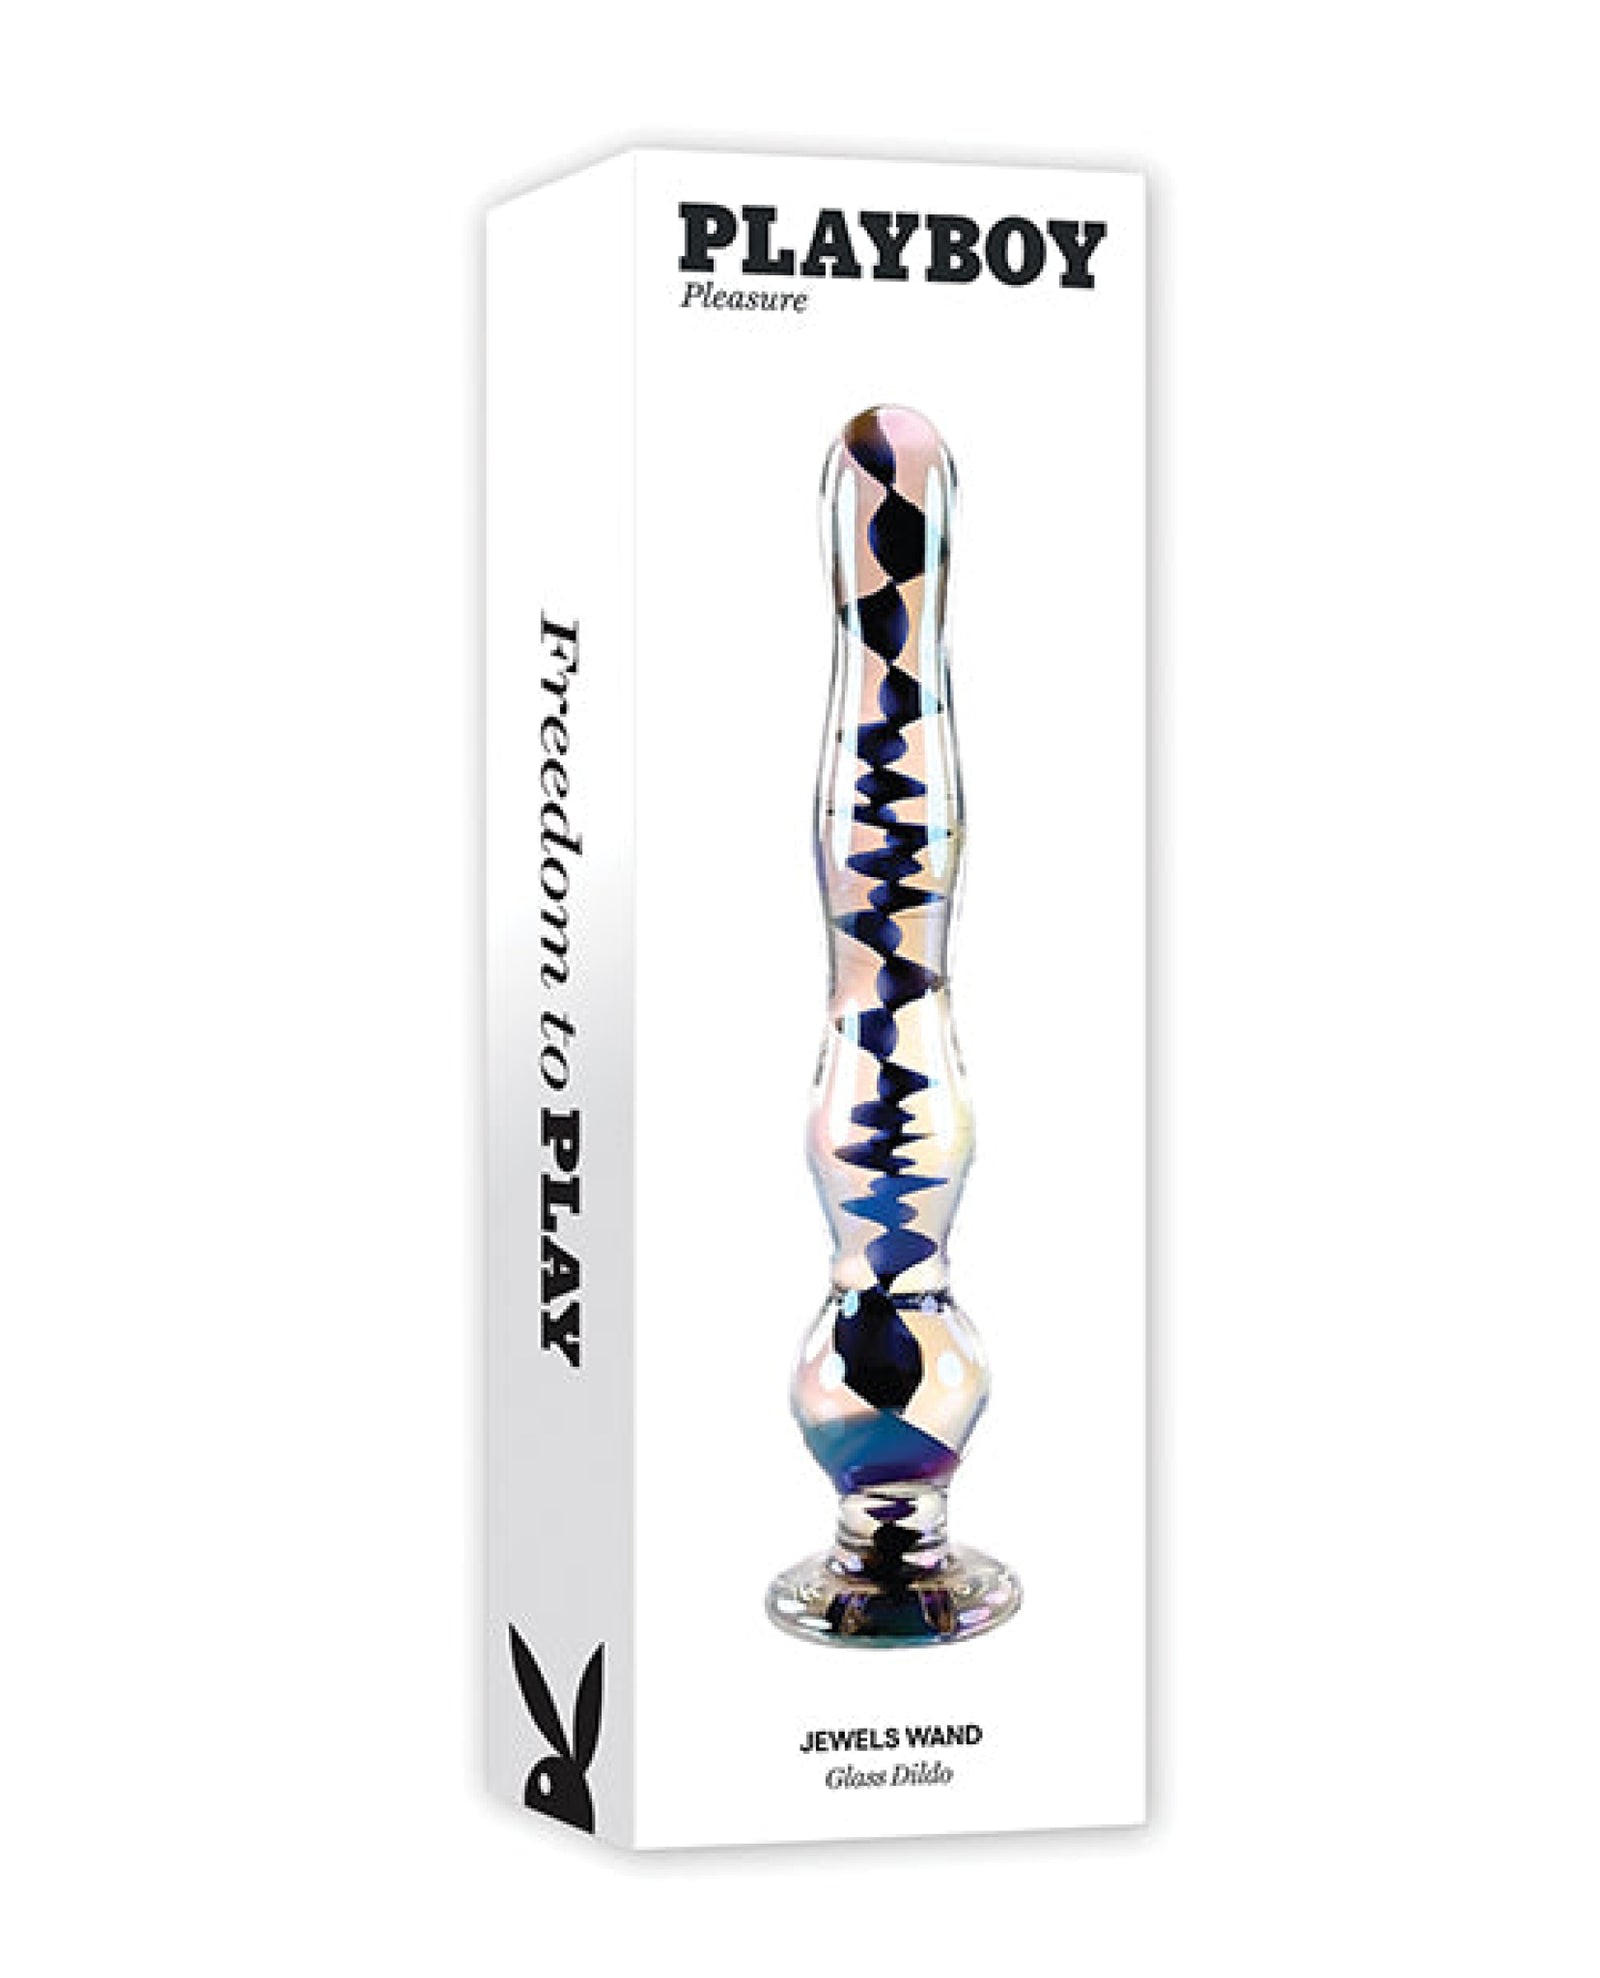 Playboy Pleasure Jewels Wand - Clear Playboy